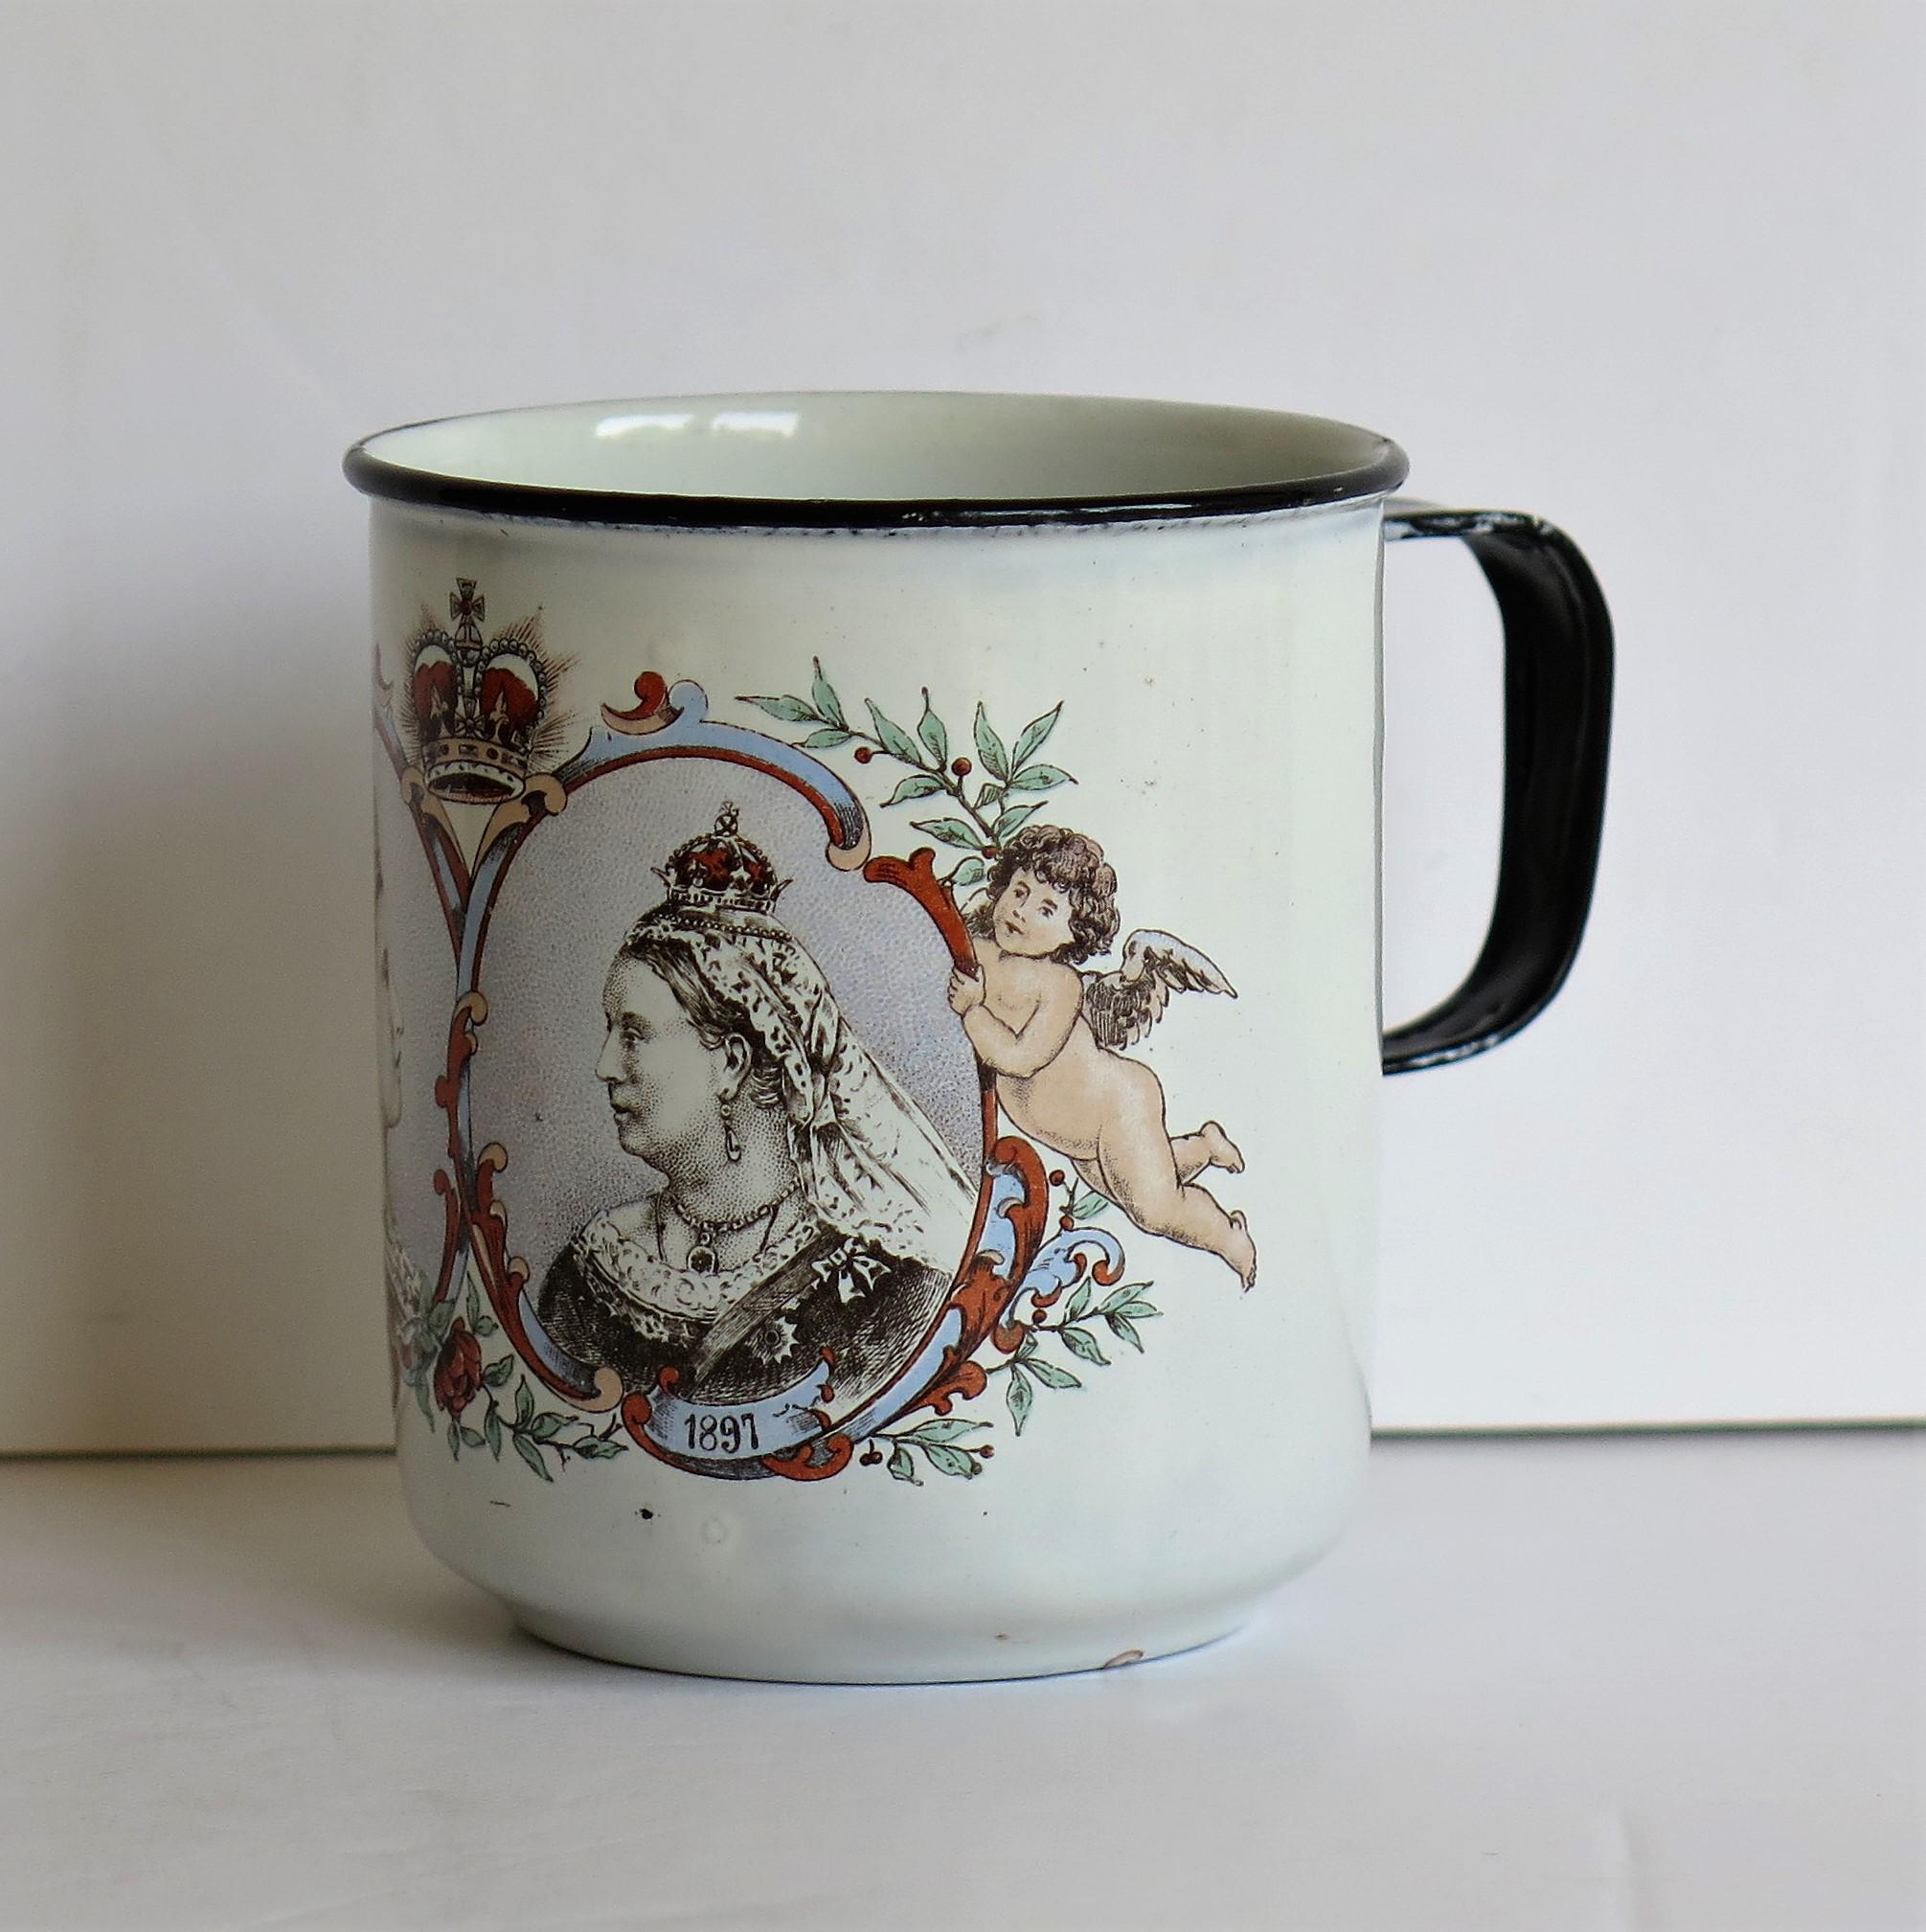 English Commemorative Queen Victoria Enamel Mug or Cup Diamond Jubilee 1837-1897 